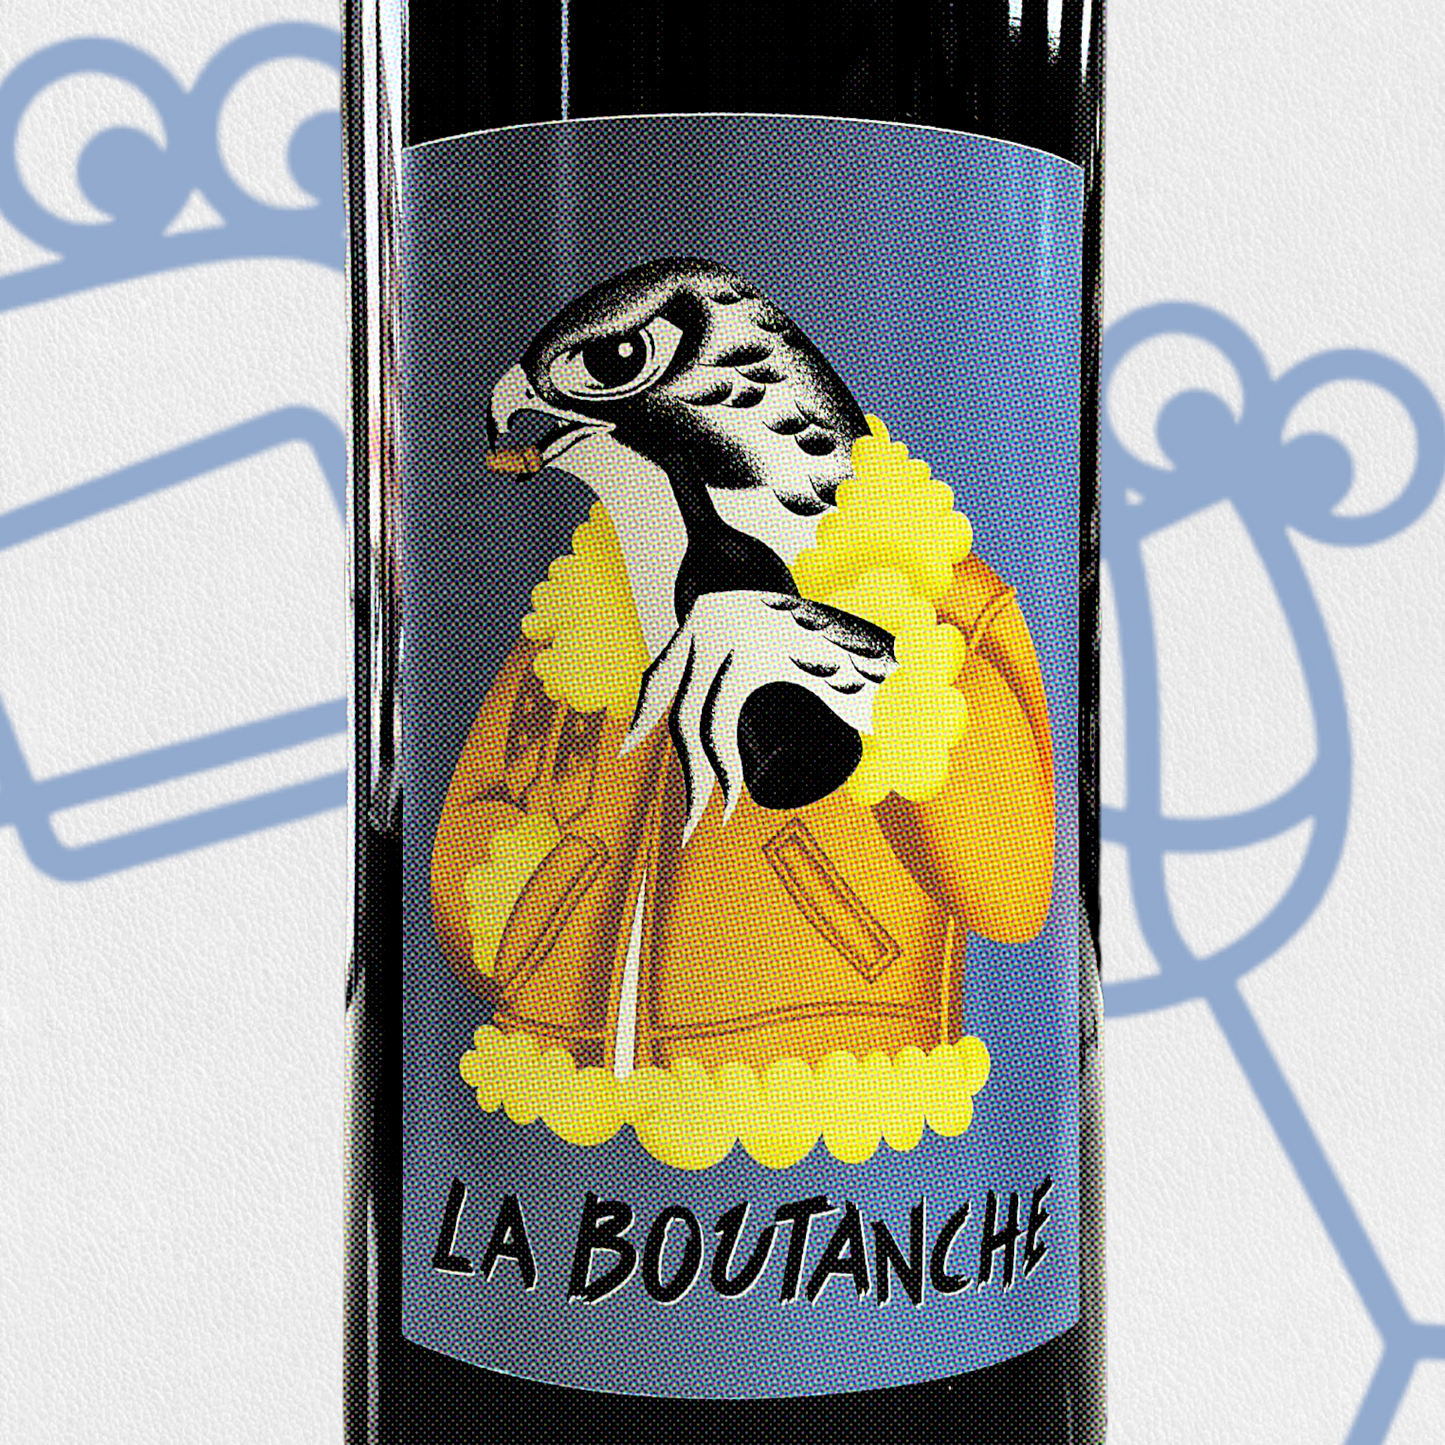 Thomas Santamaria 'La Boutanche' 2020 Corsica, France 1L - Williston Park Wines & Spirits